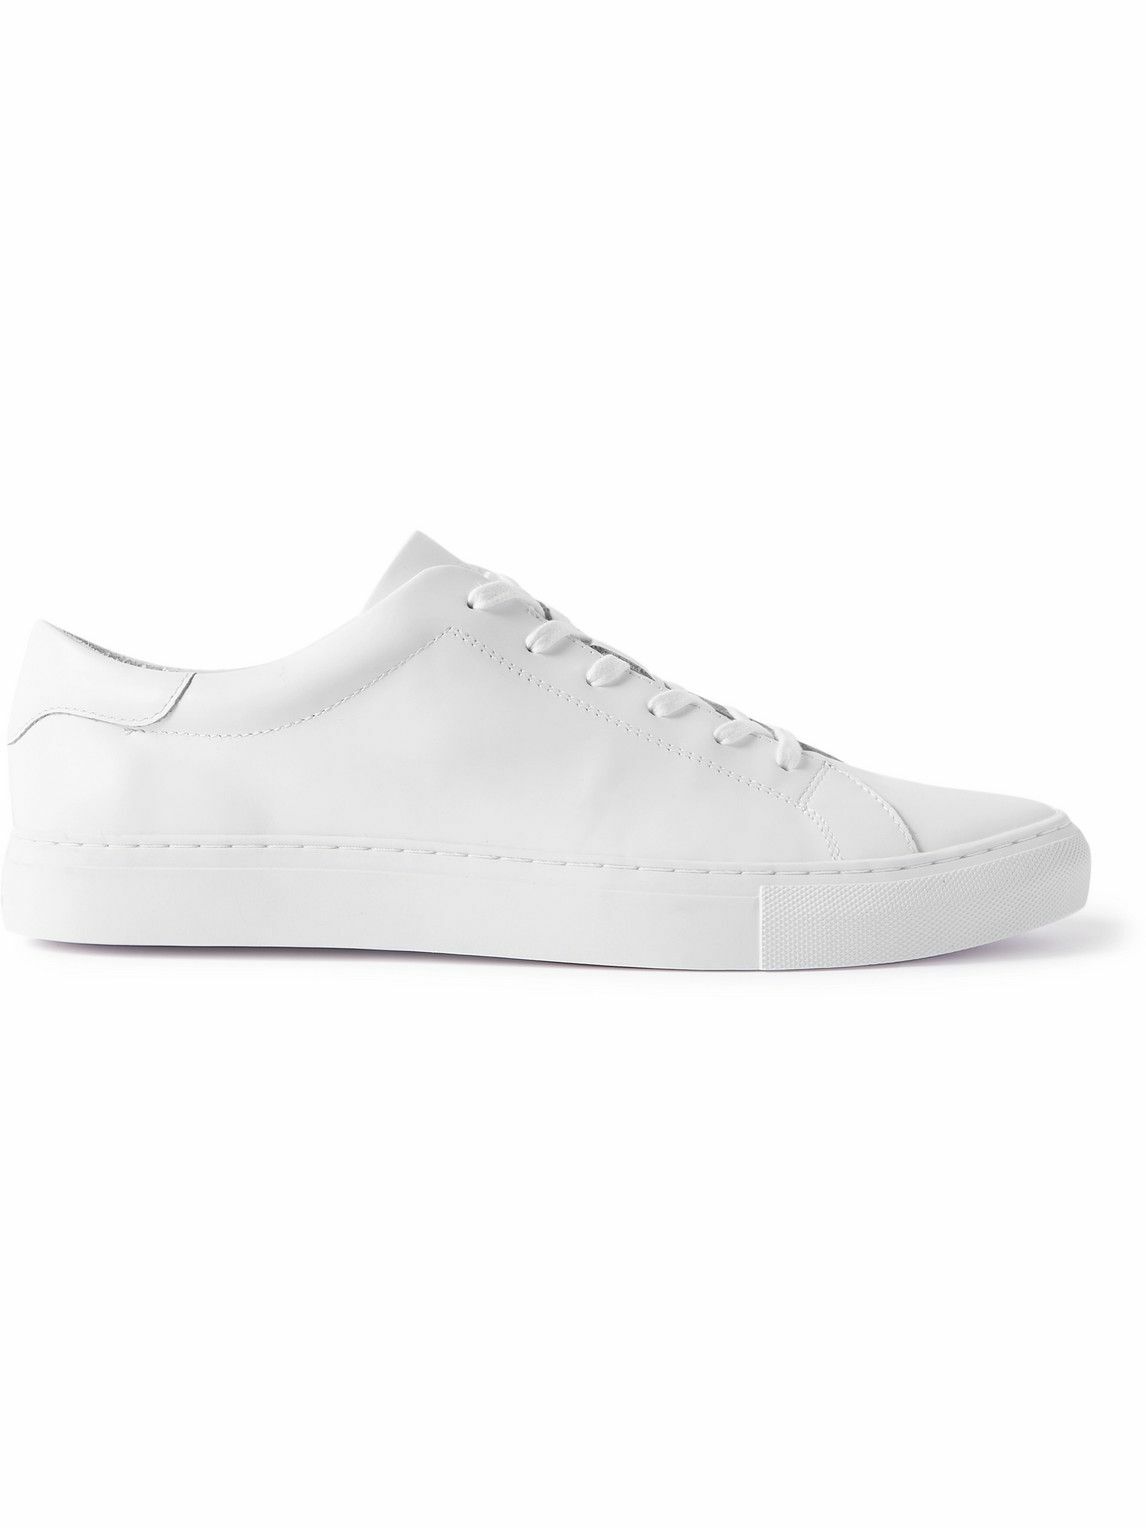 Photo: Polo Ralph Lauren - Jermain II Leather Sneakers - White